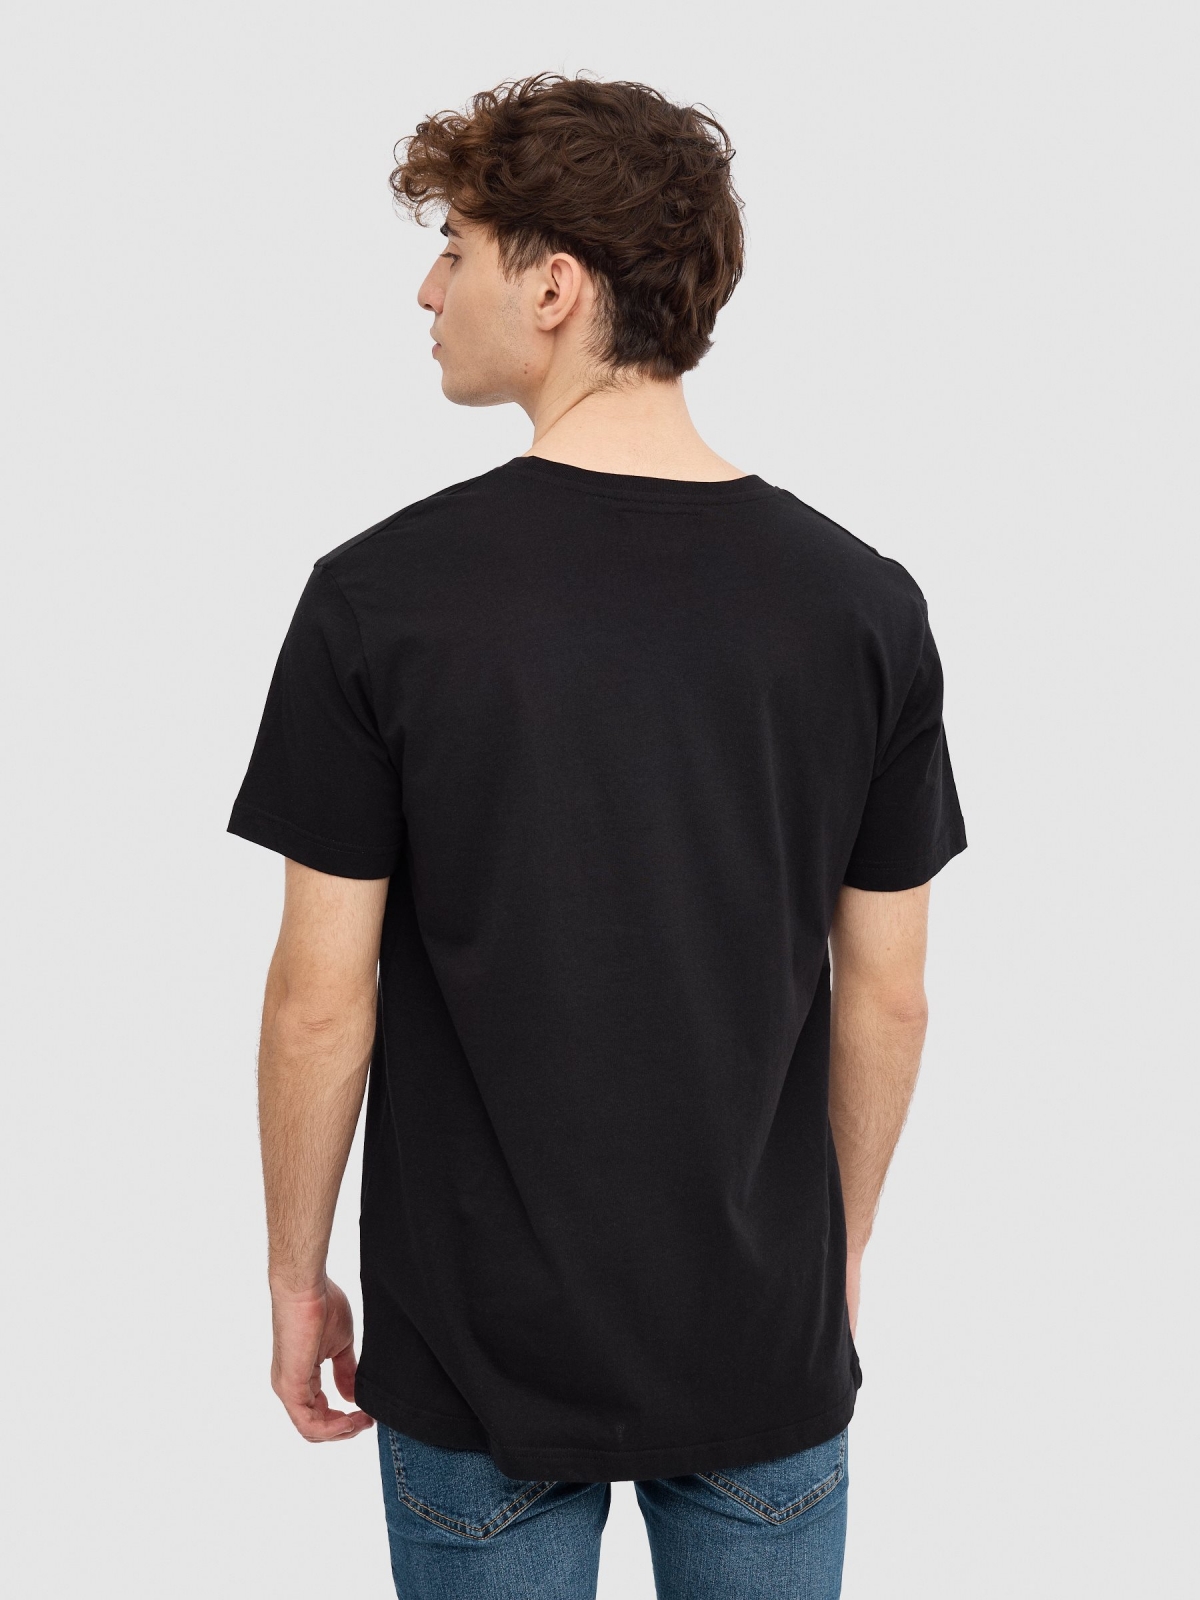 Camiseta texto minimalista negro vista media trasera